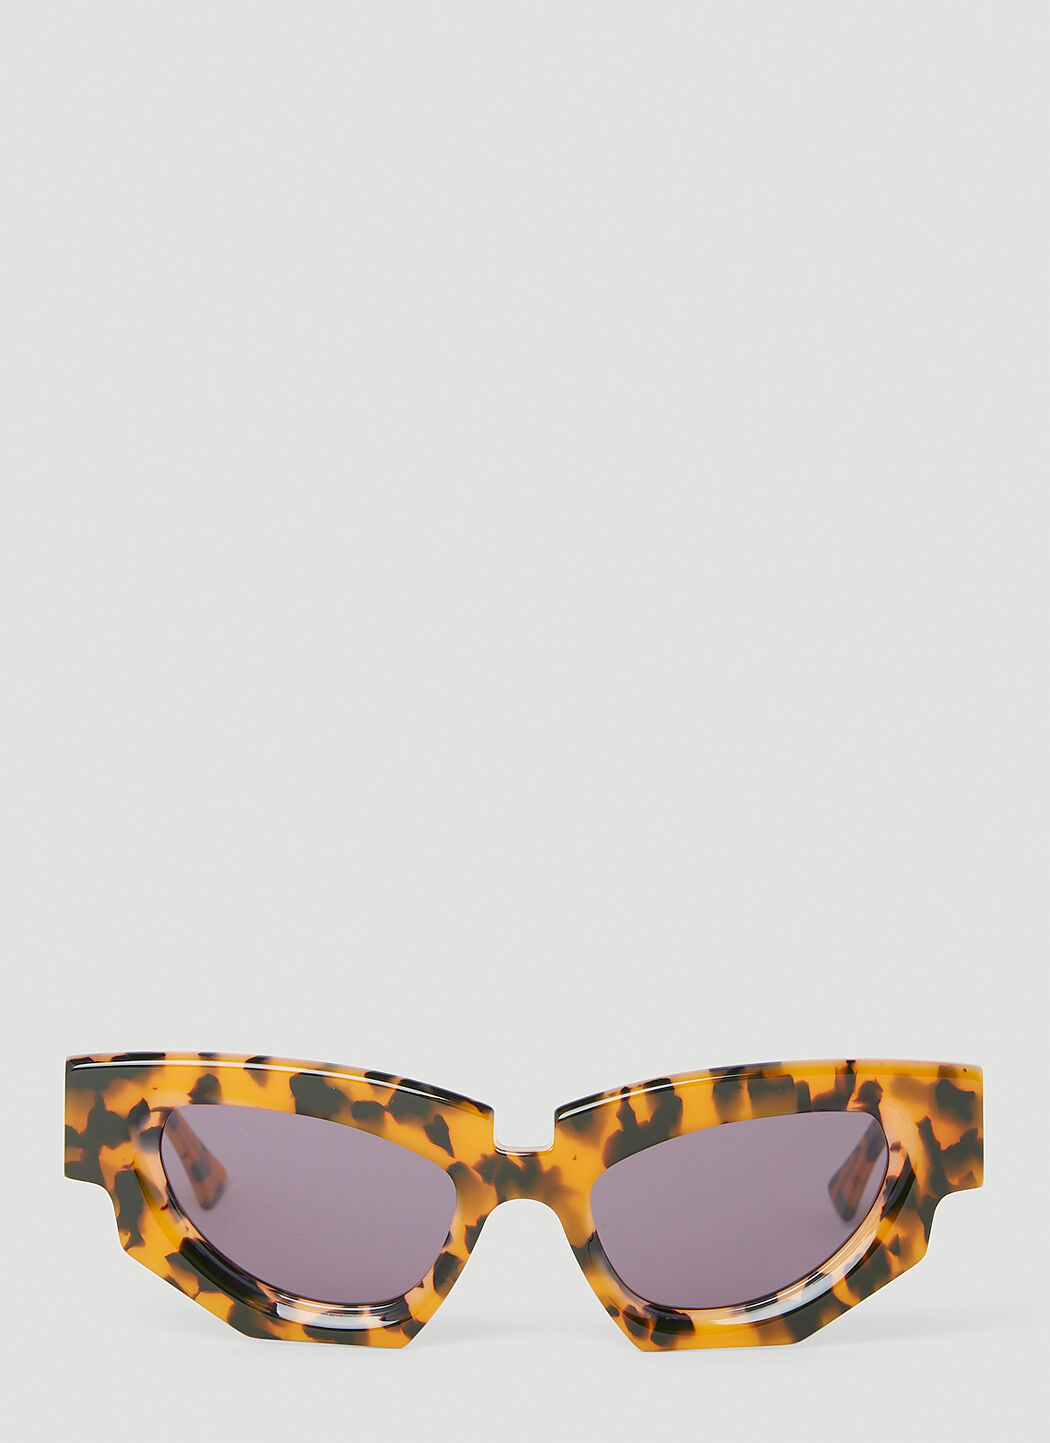 Kuboraum F5 Tortoiseshell Sunglasses Black kub0354013